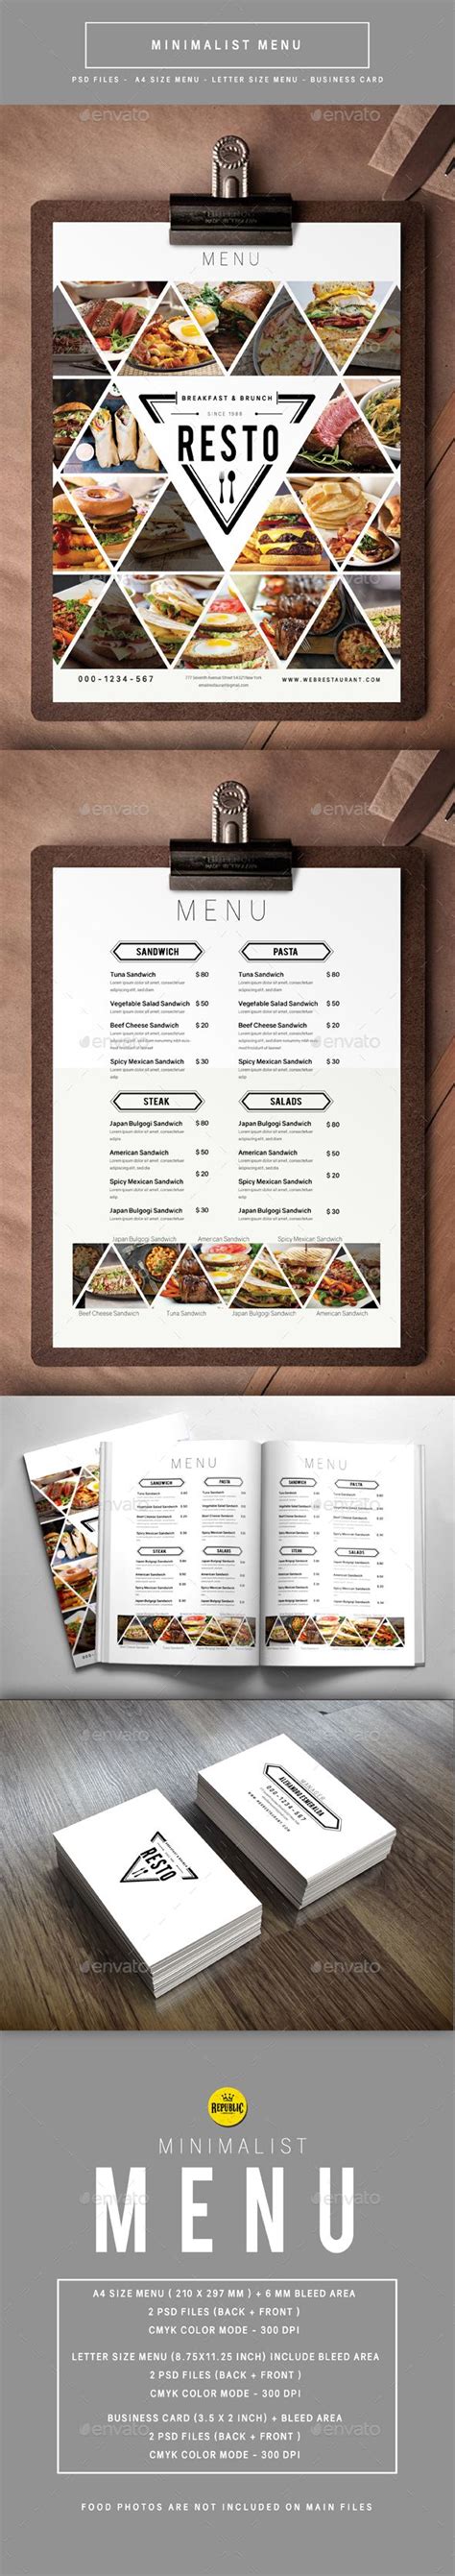 Best 25+ Menu design ideas on Pinterest | Restaurant menu ...